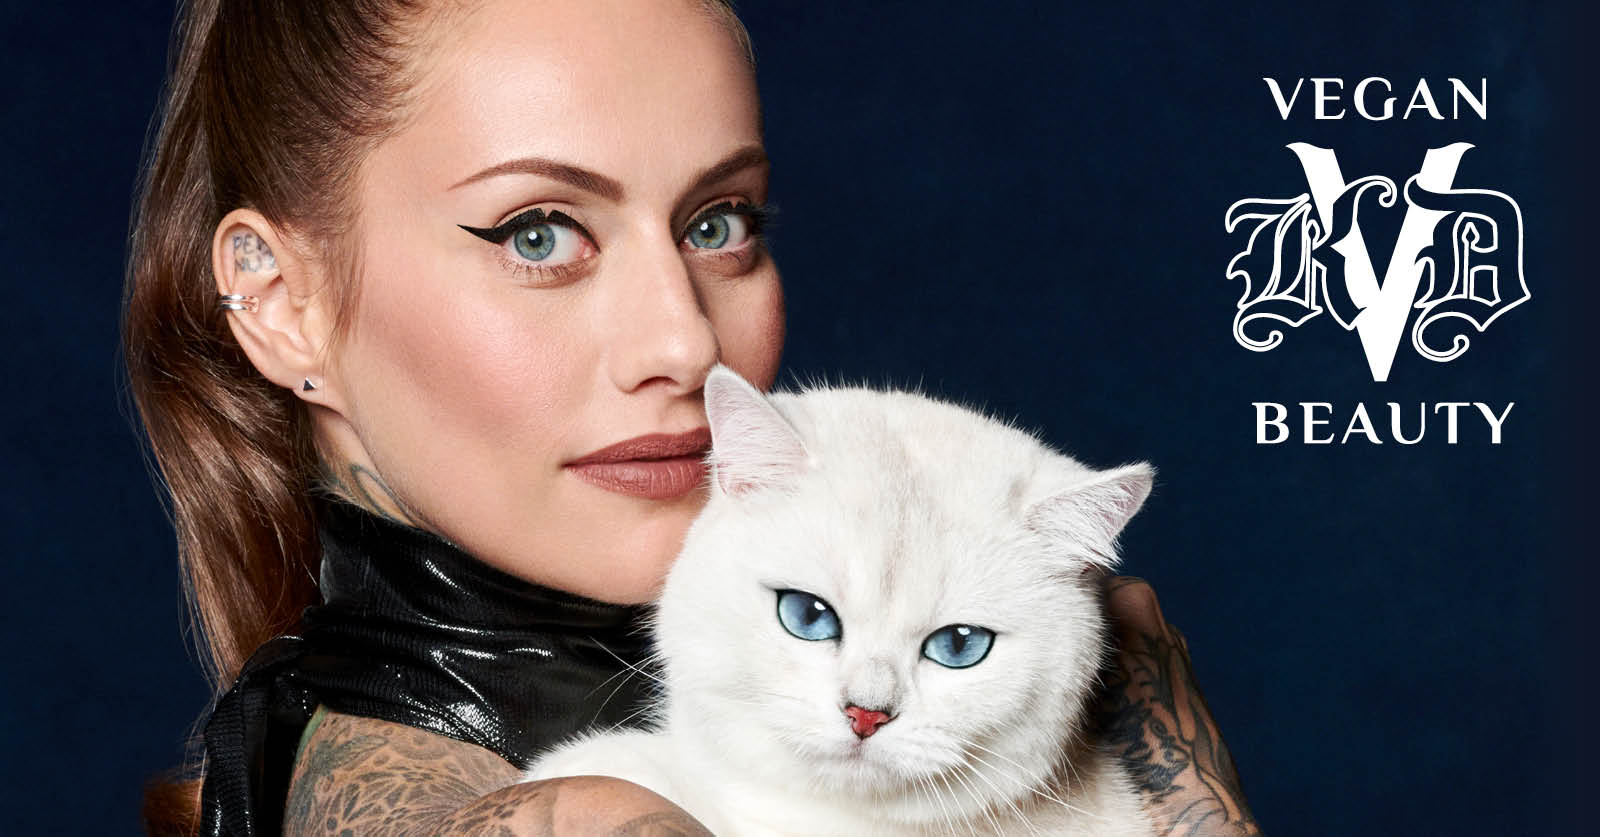 KVD Vegan Beauty International Makeup Artist, Fanny Maurer in Cat Eyes For All Campaign